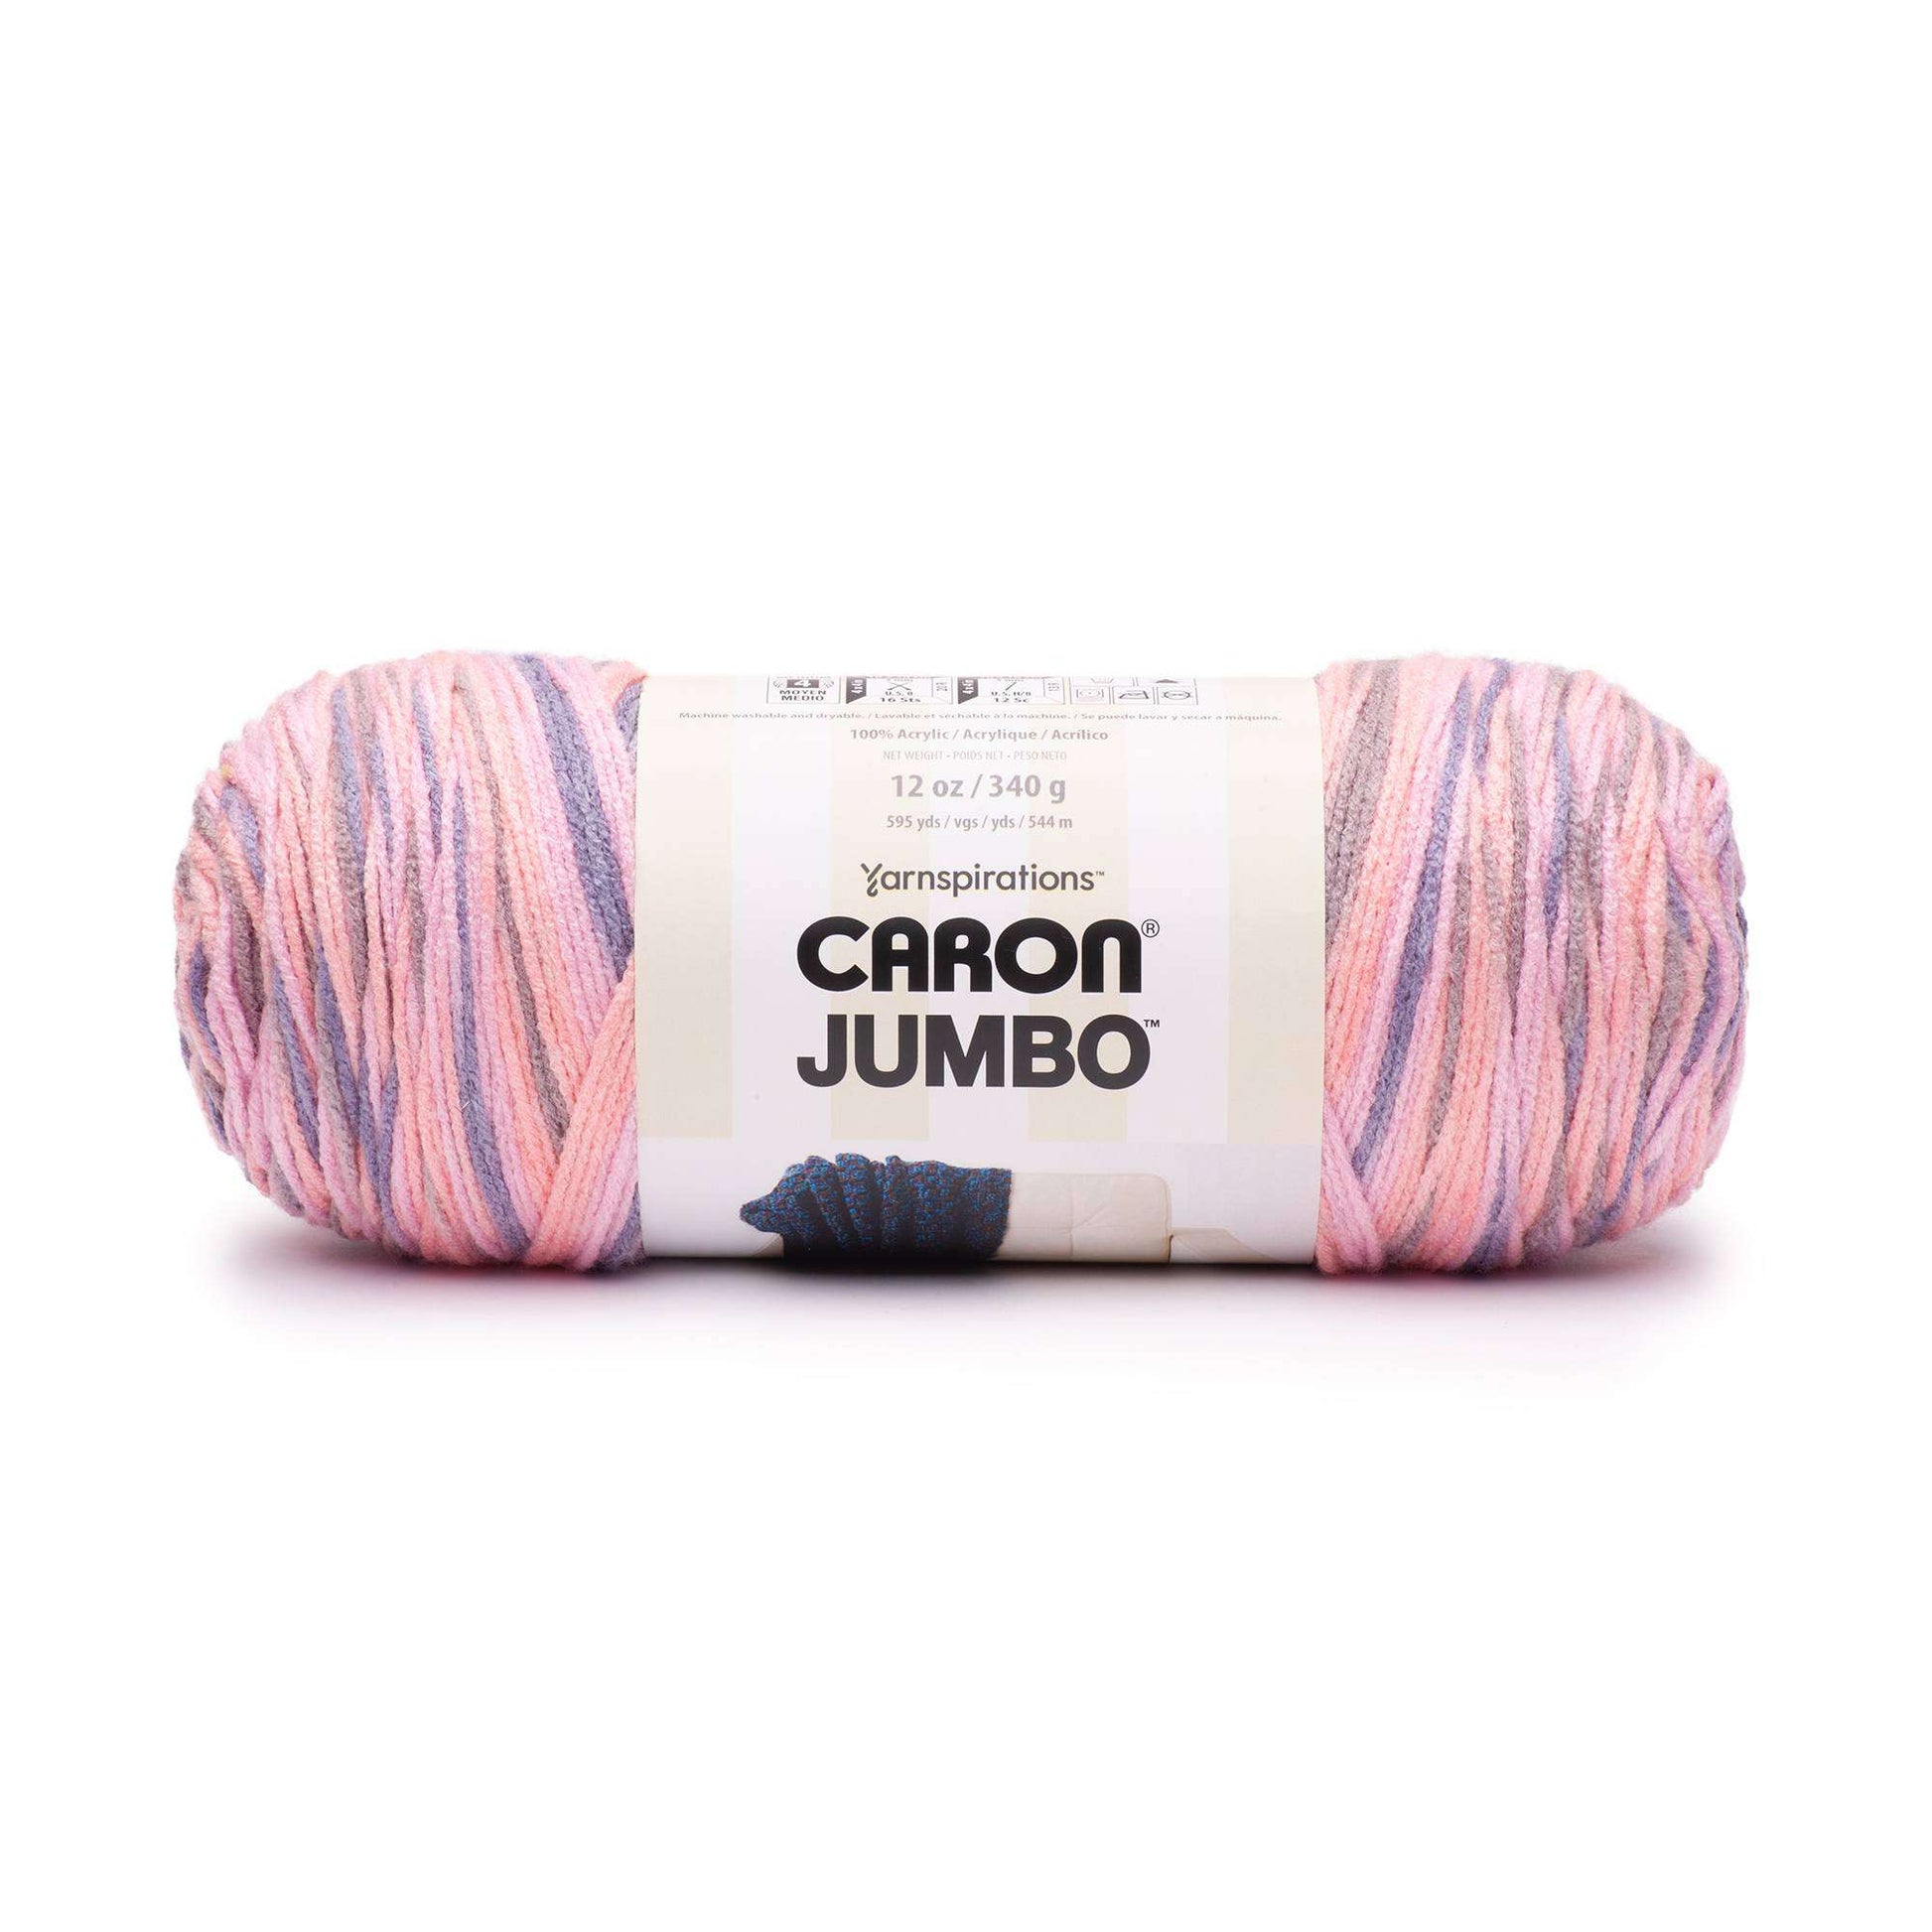 What To Do With Caron Jumbo Yarn